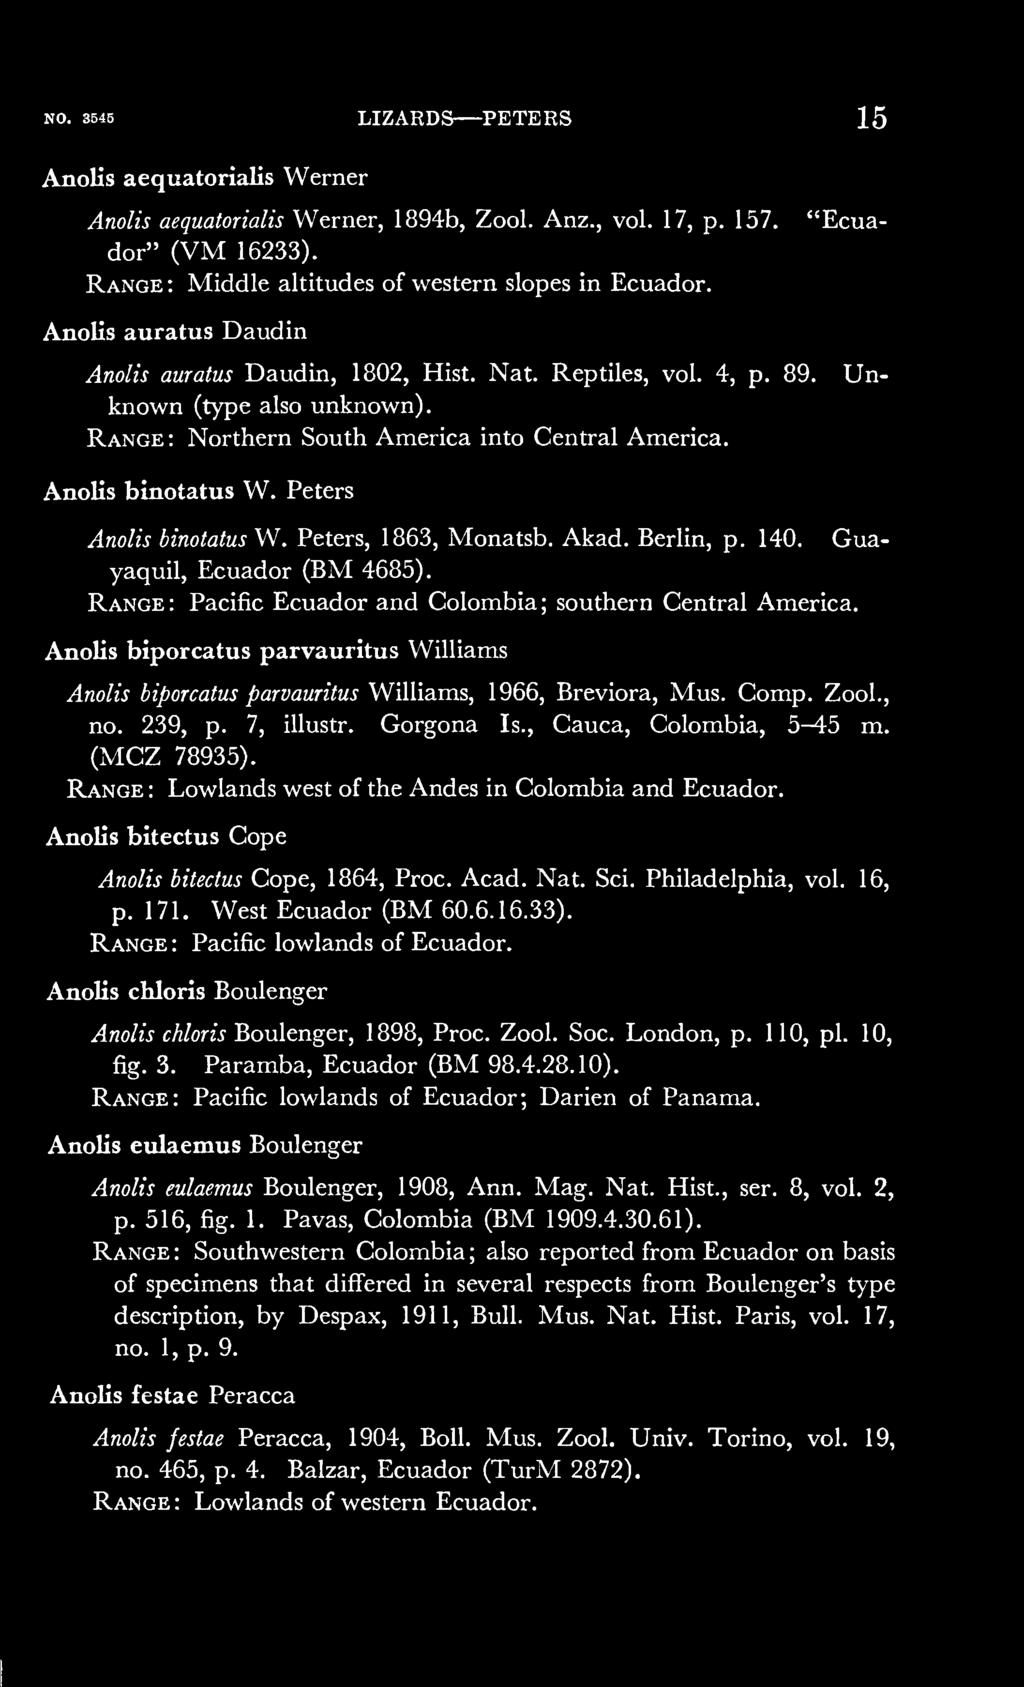 Peters Anolis binotatus YJ. Peters, 1863, Monatsb. Akad. Berlin, p. 140. Guayaquil, Ecuador (BM 4685). Range: Pacific Ecuador and Colombia; southern Central America.